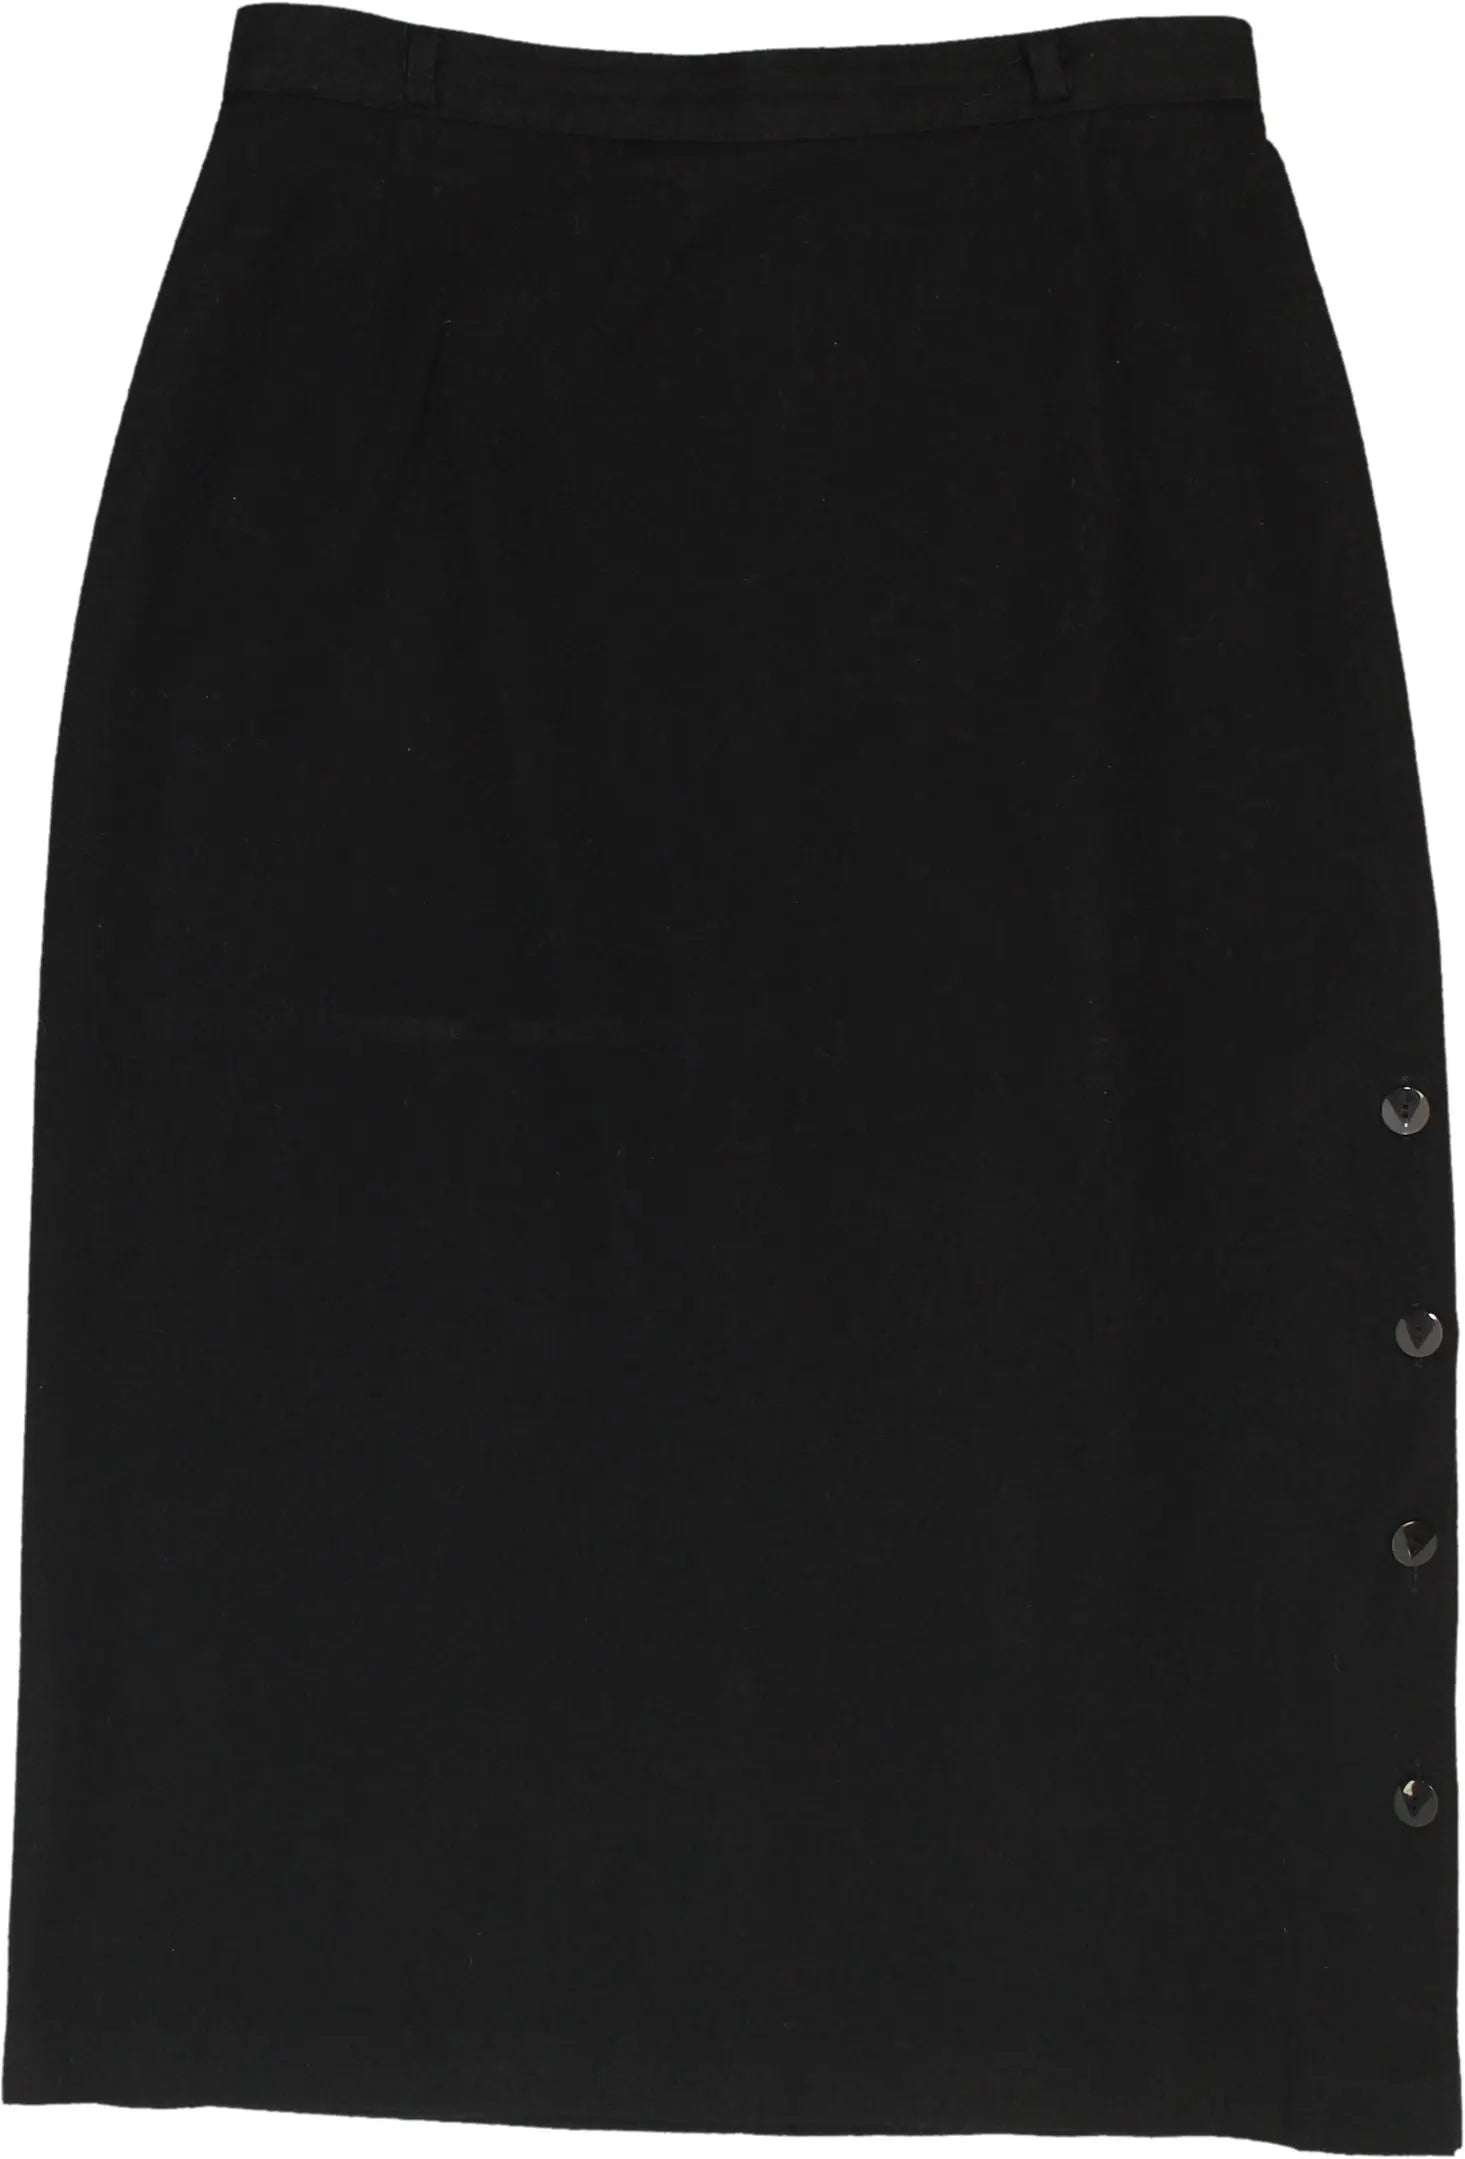 Kreymborg - Black maxi skirt- ThriftTale.com - Vintage and second handclothing